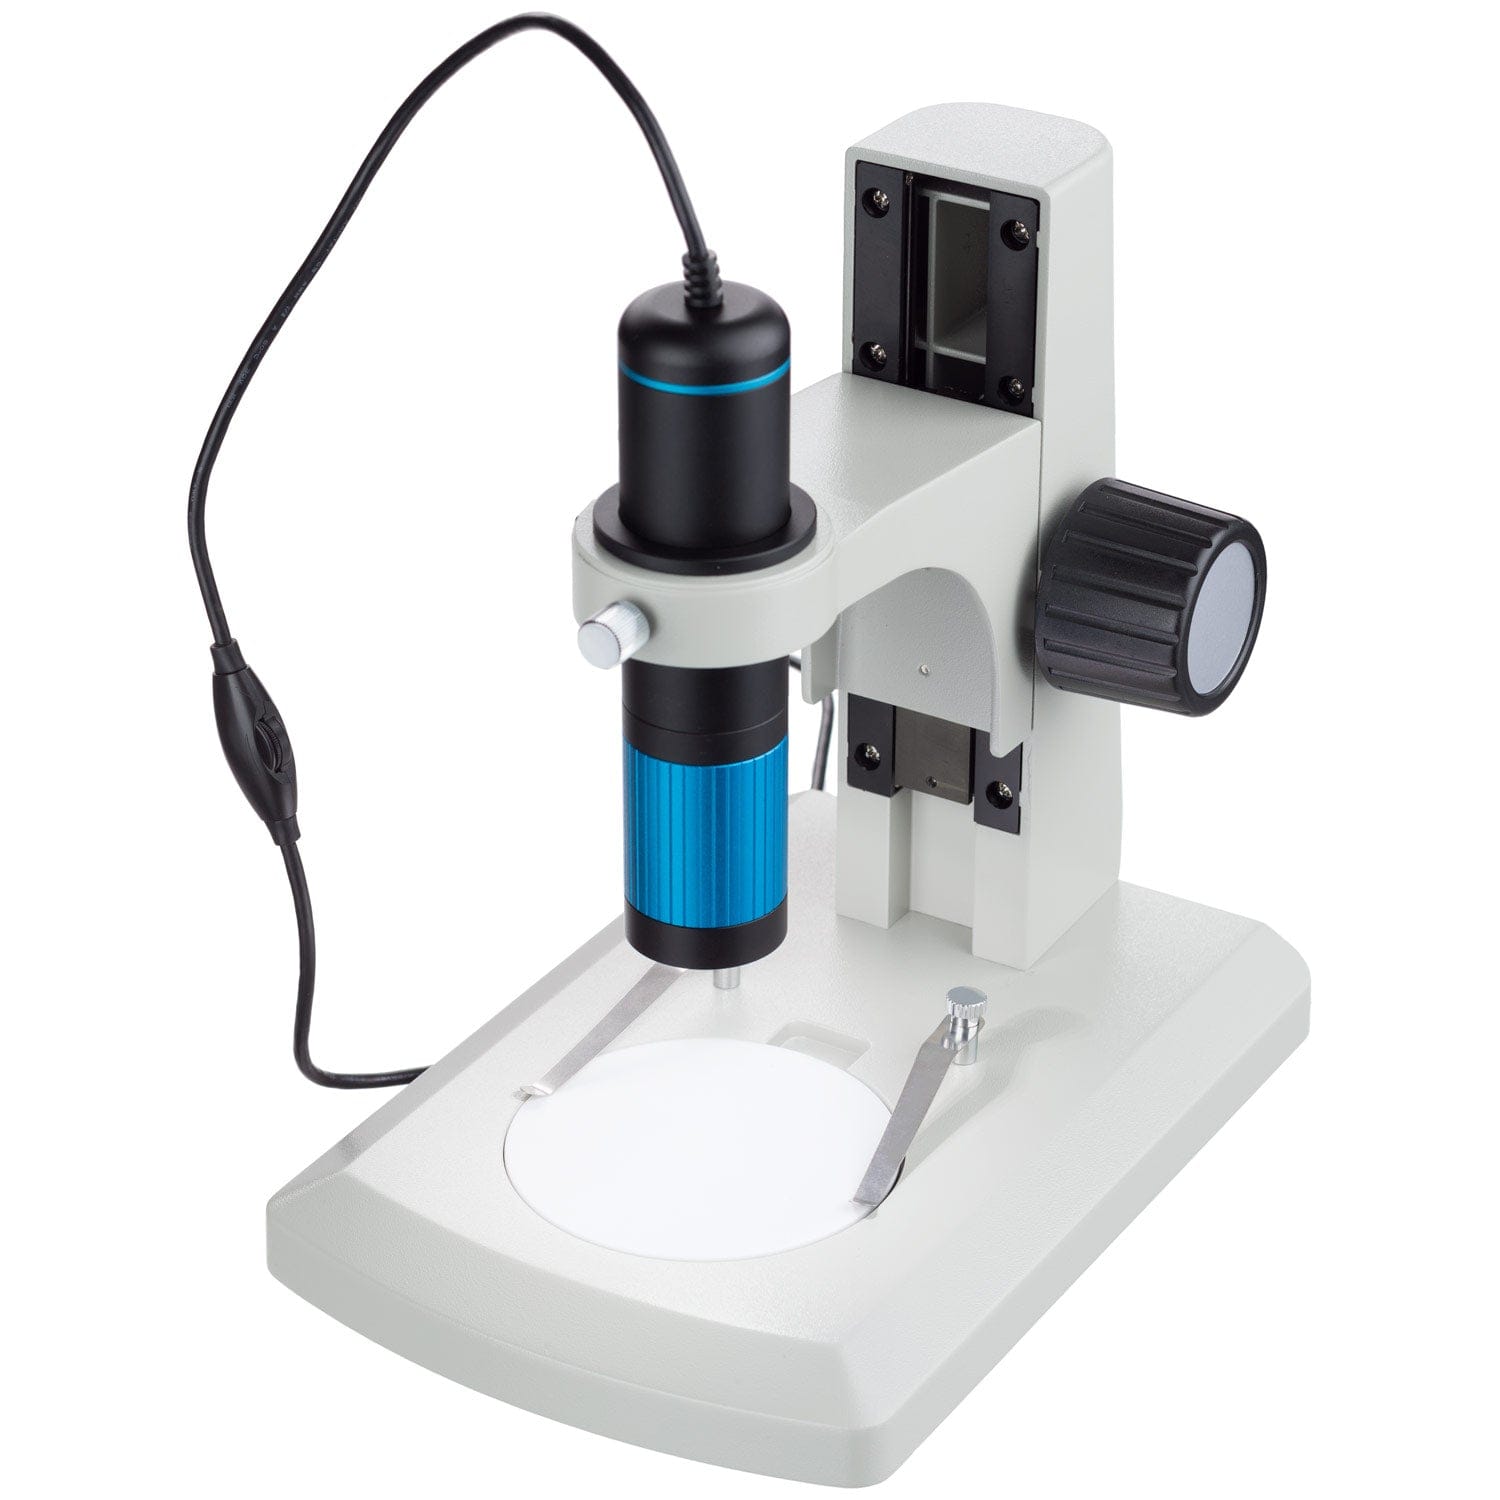 5MP USB High-speed Microscope Camera + Software + Calibration Kit – AmScope